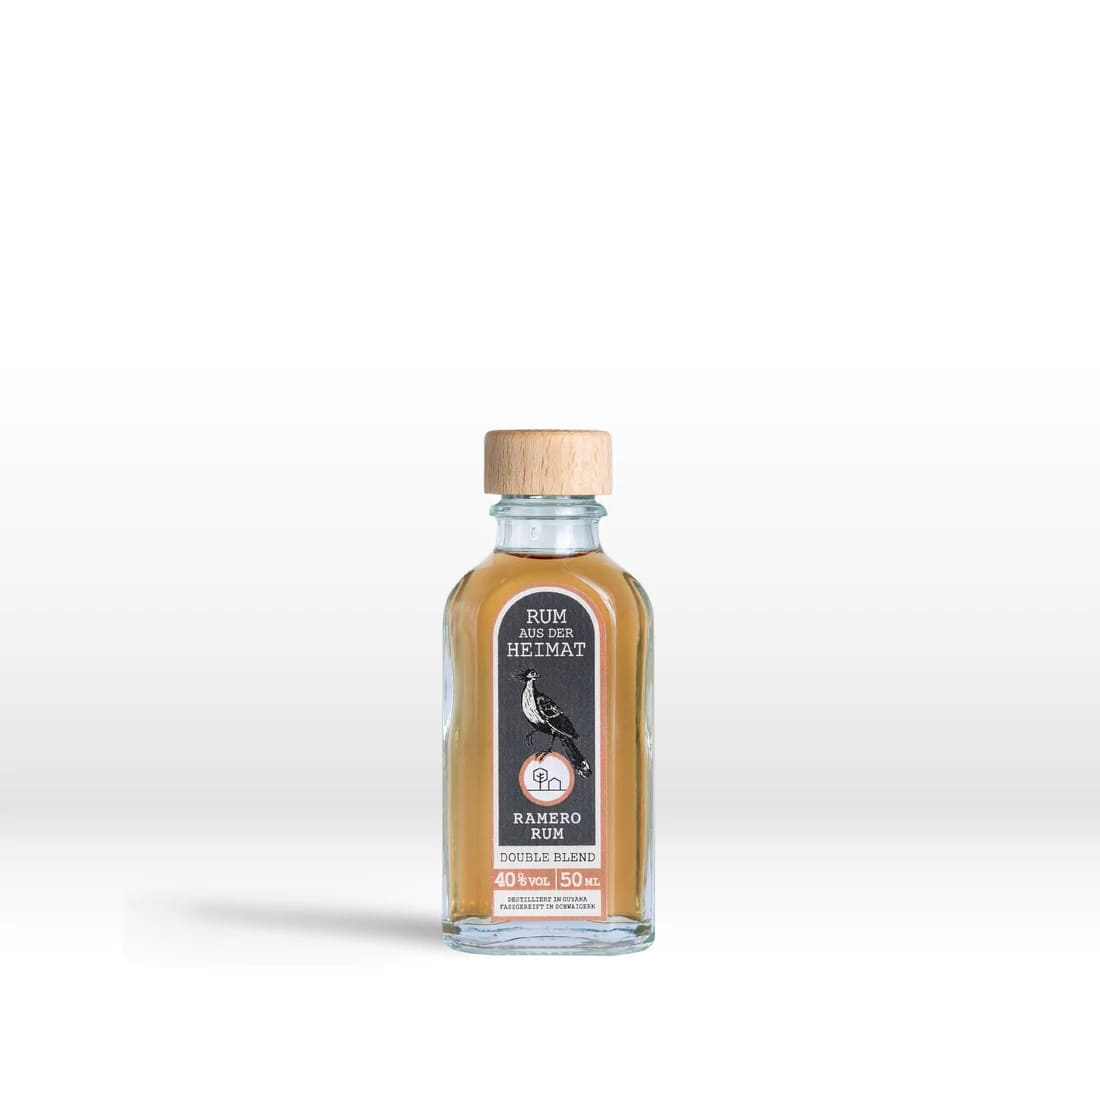 RAMERO Rum, Double Blend Mini 50ml, Heimat Gin